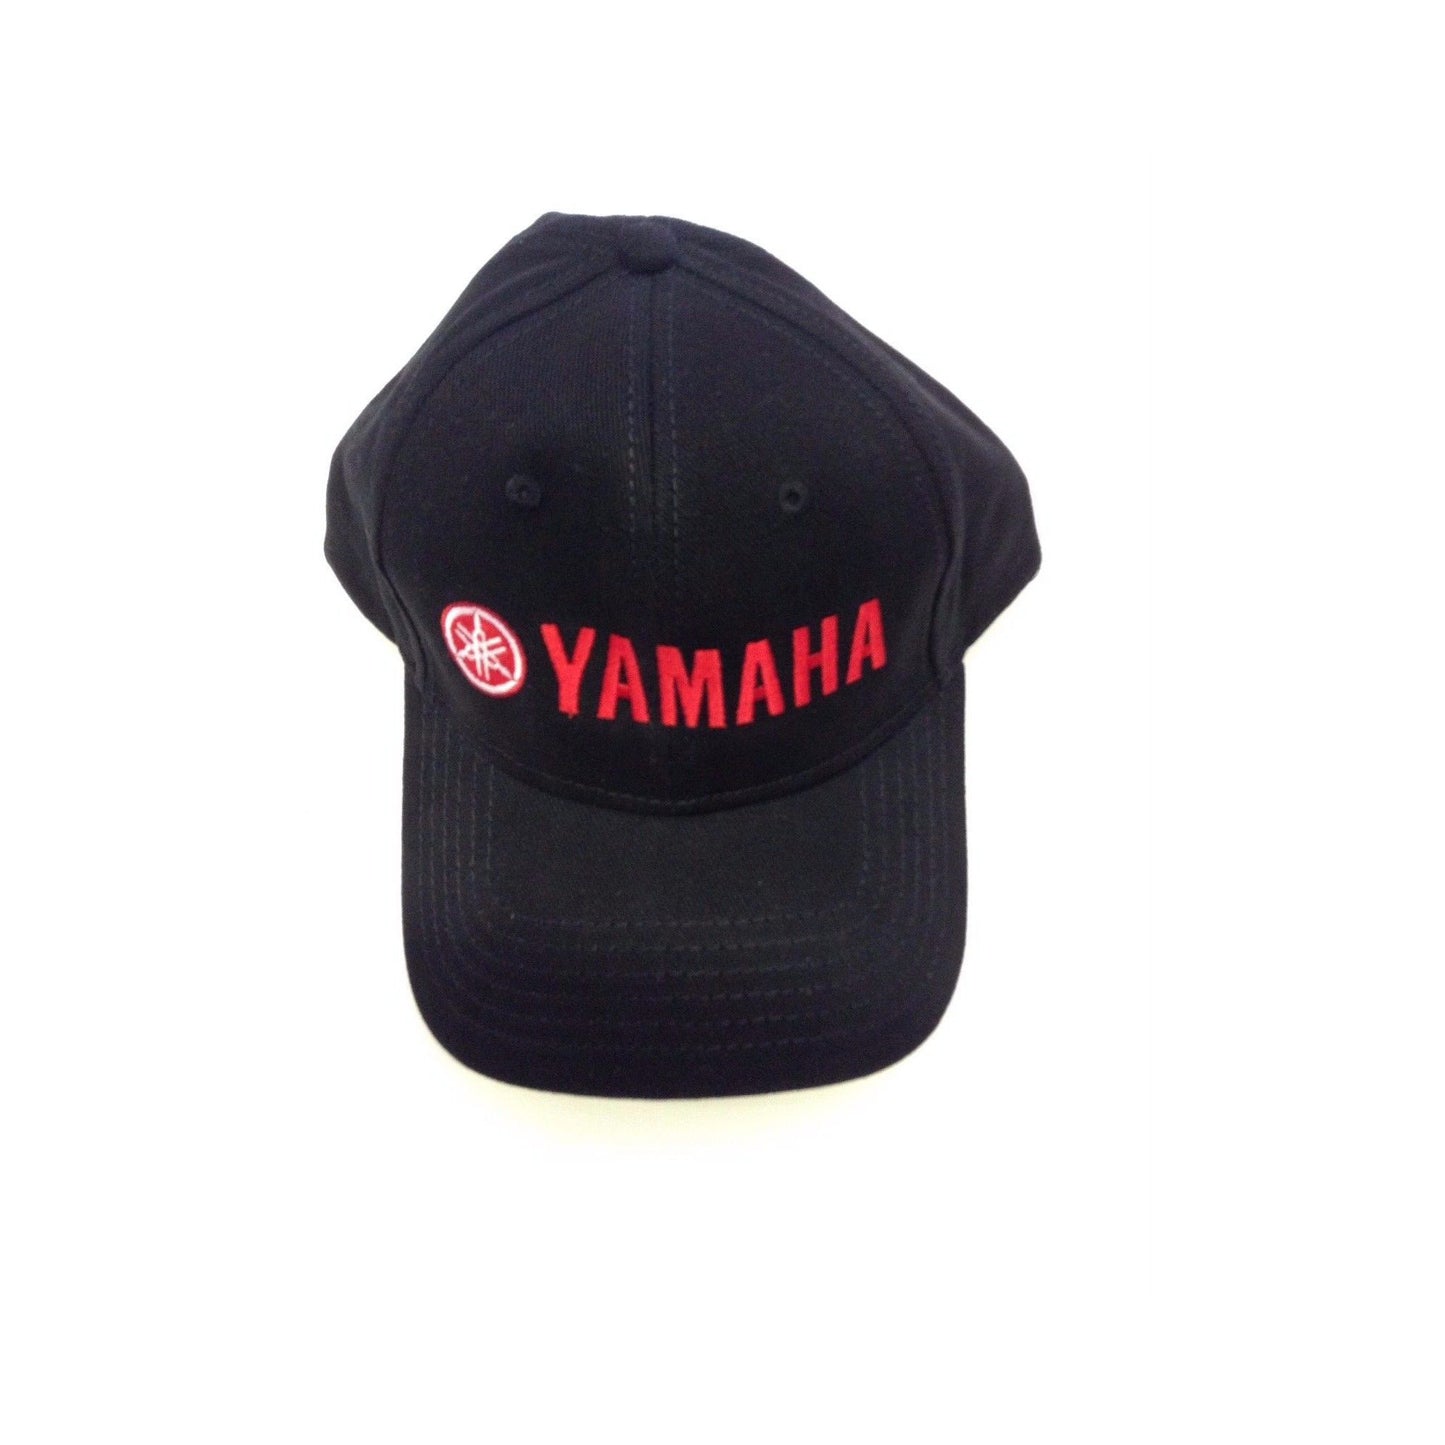 New Authentic Yamaha Cloth Hat